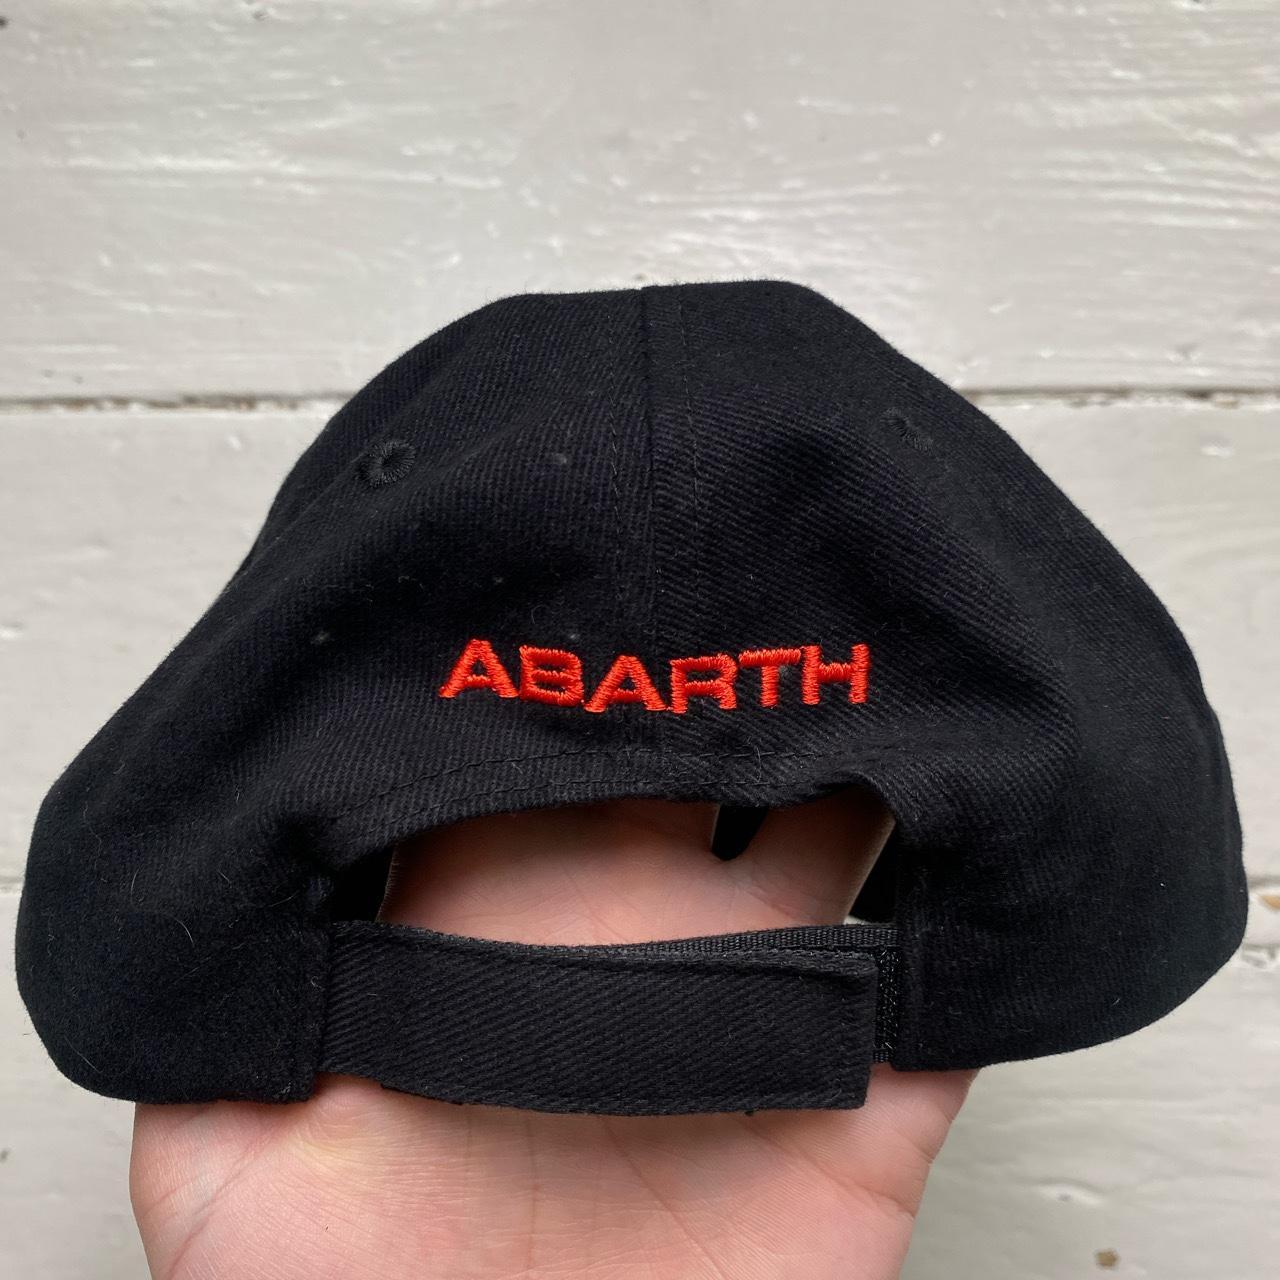 Abarth Kappa Black Baseball Cap